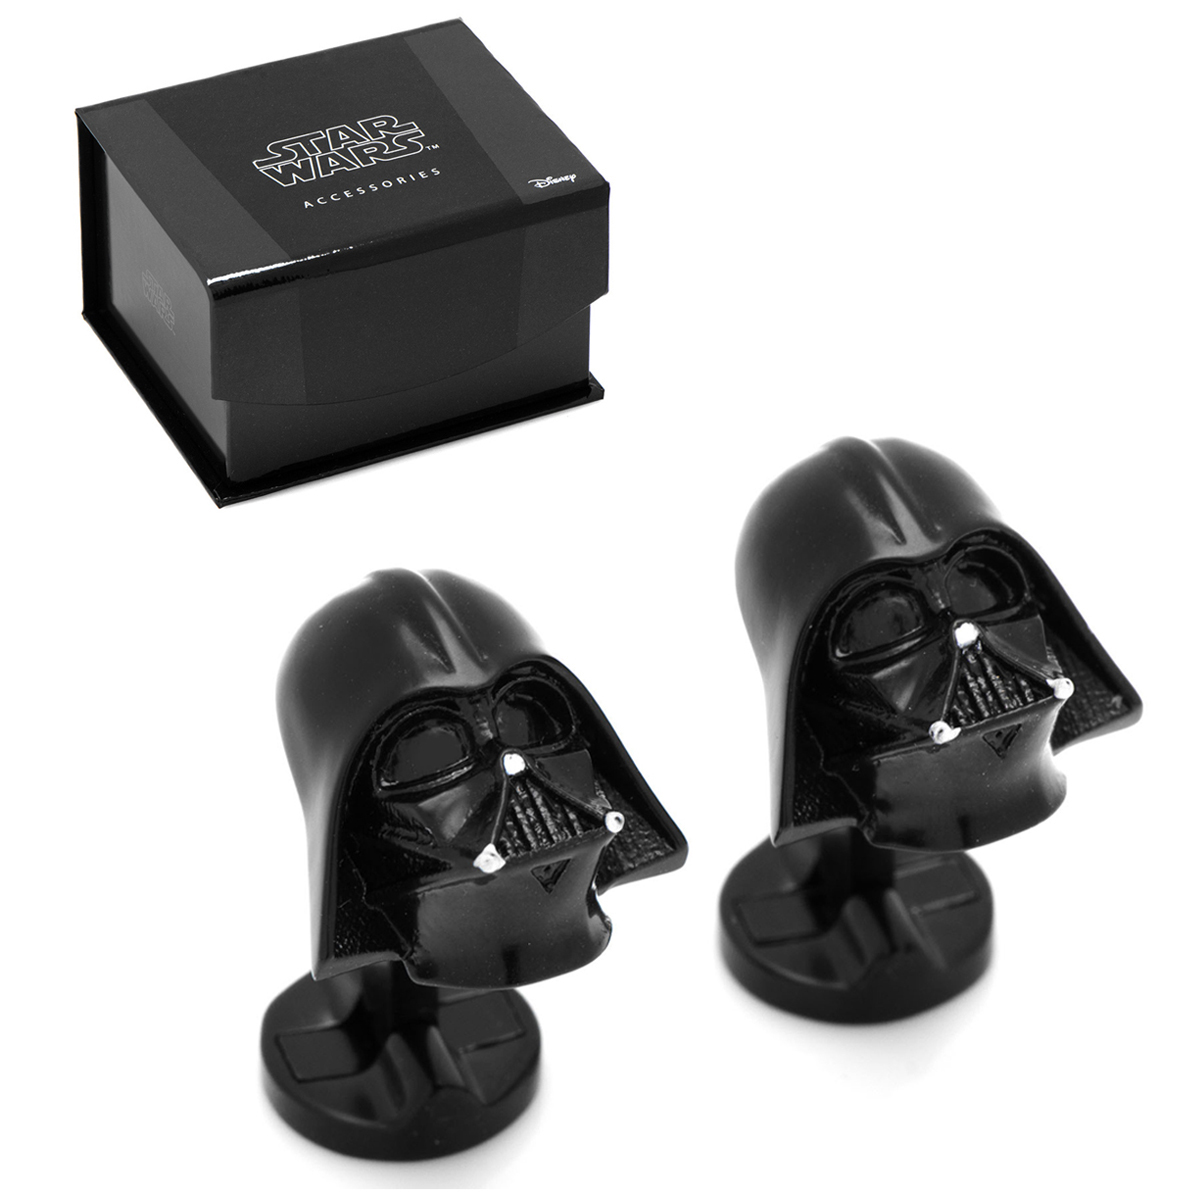 Star Wars Darth Vader Cufflinks Black in Star Wars Gift Box